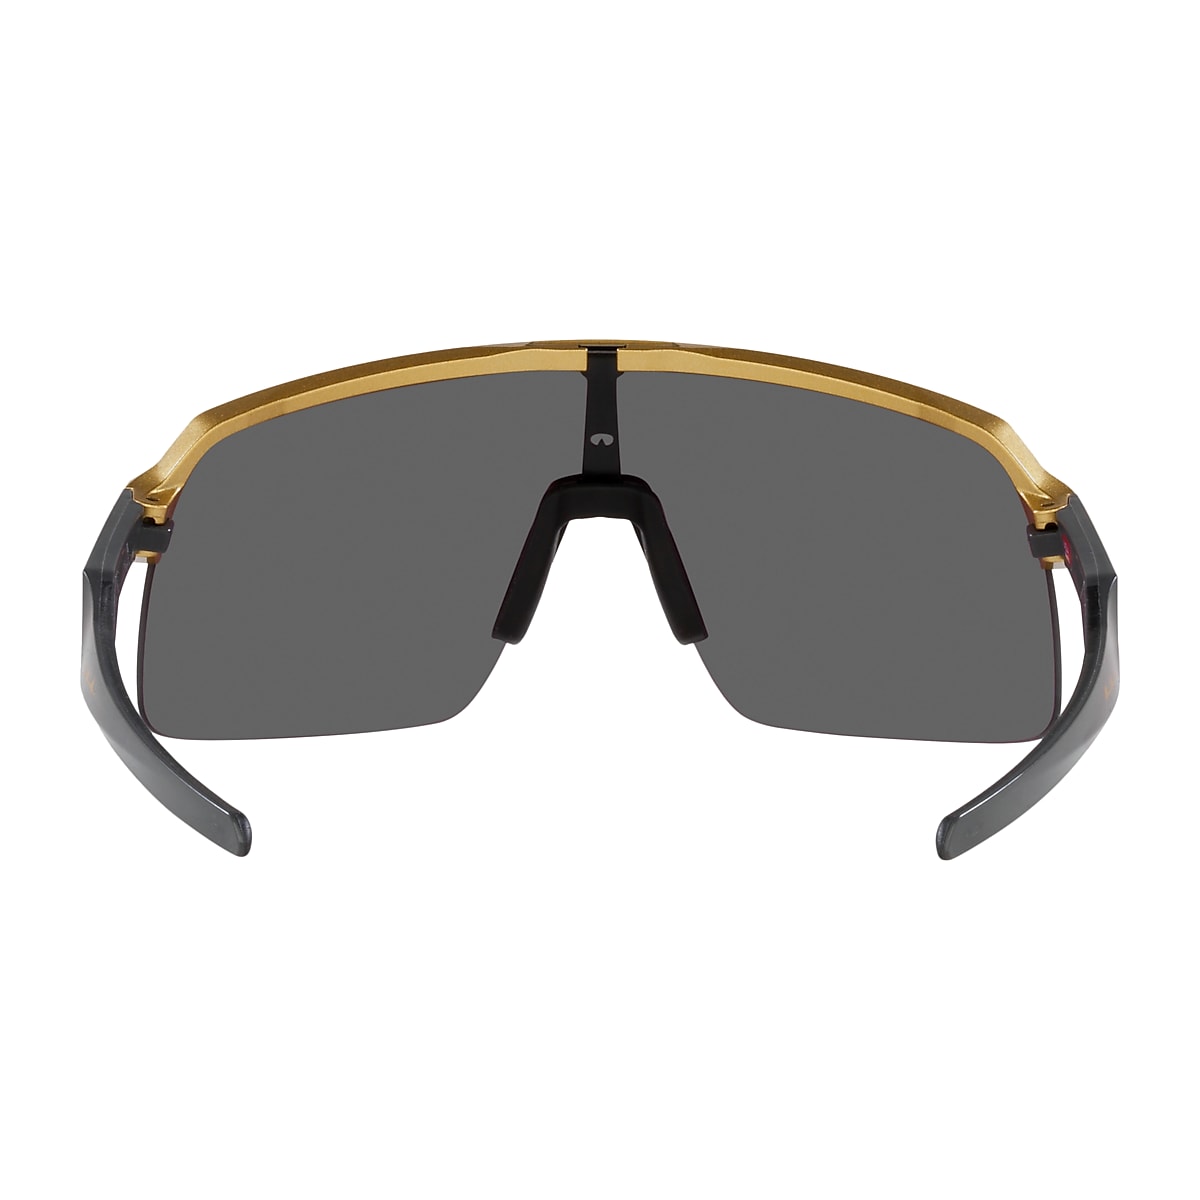 Oakley Sutro Patrick Mahomes II Prizm Sunglasses - Men's